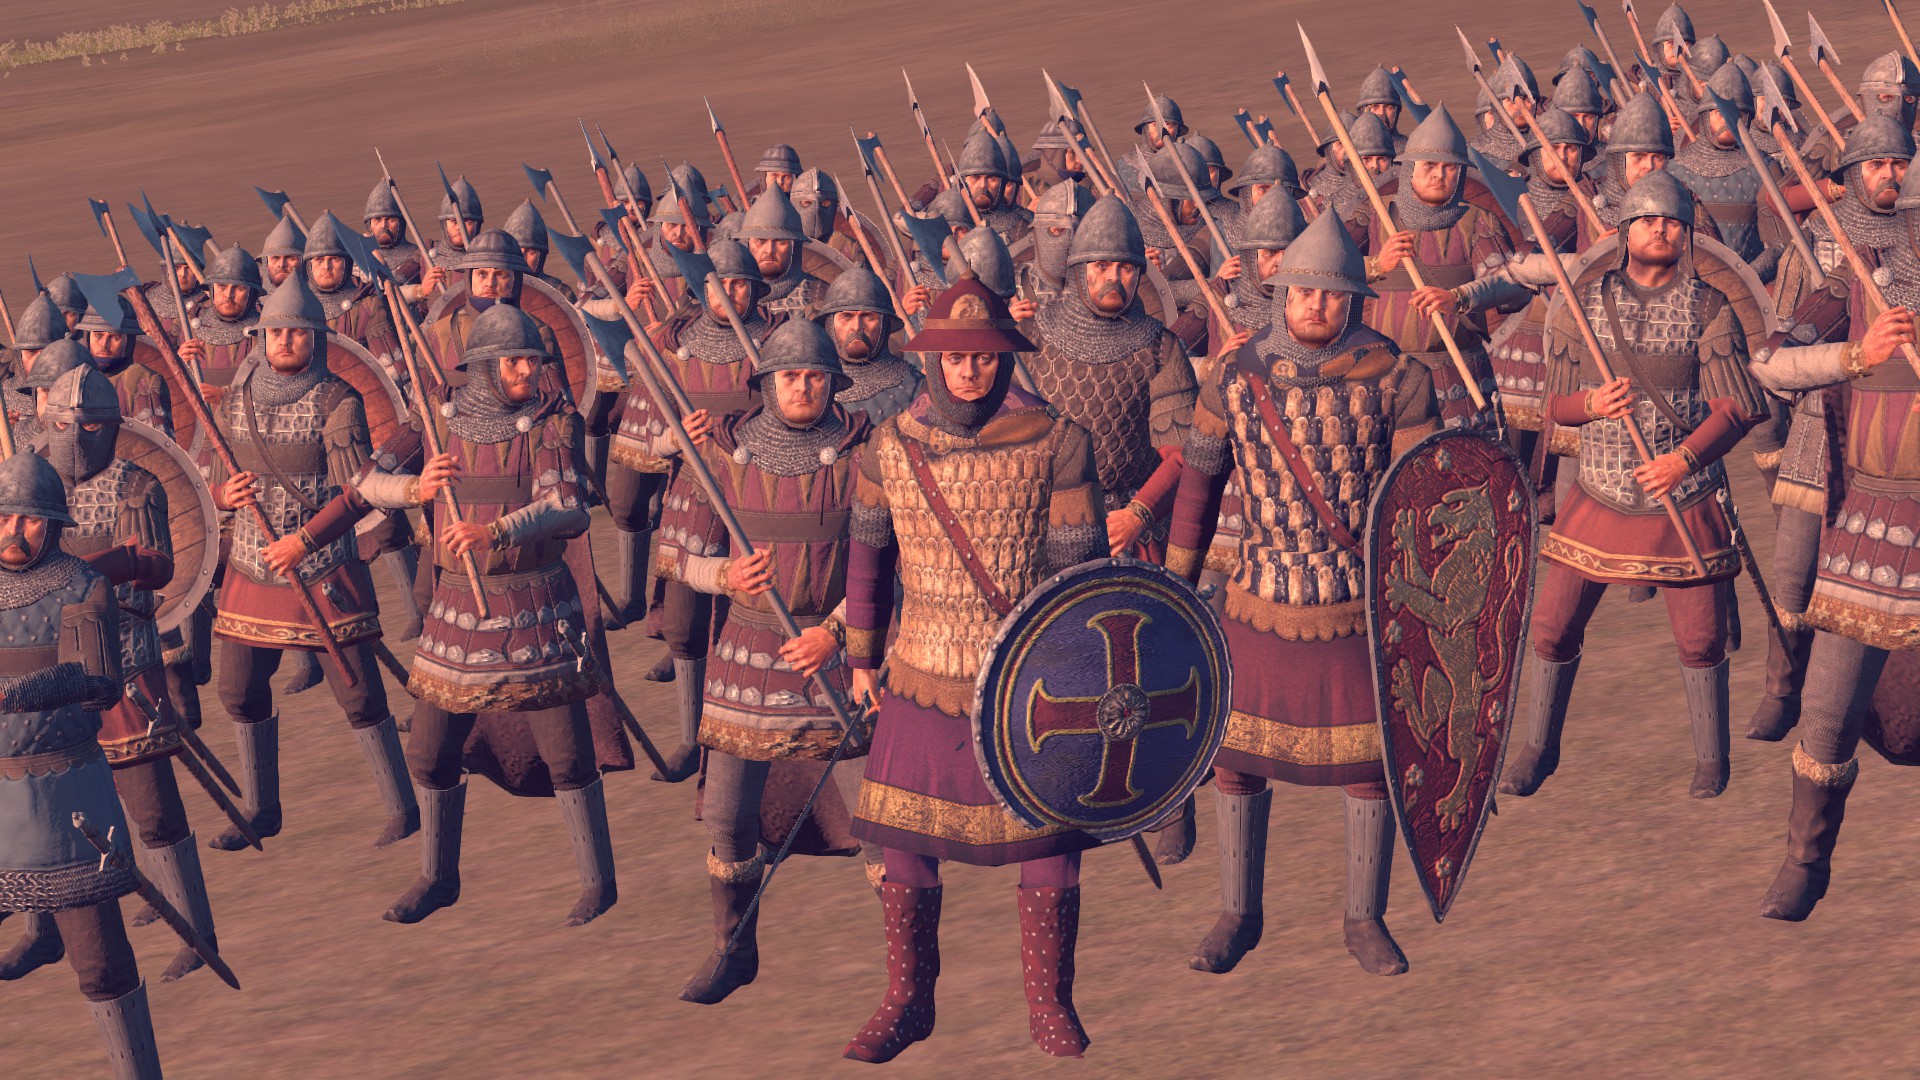 total war rome ii emperor edition 2014